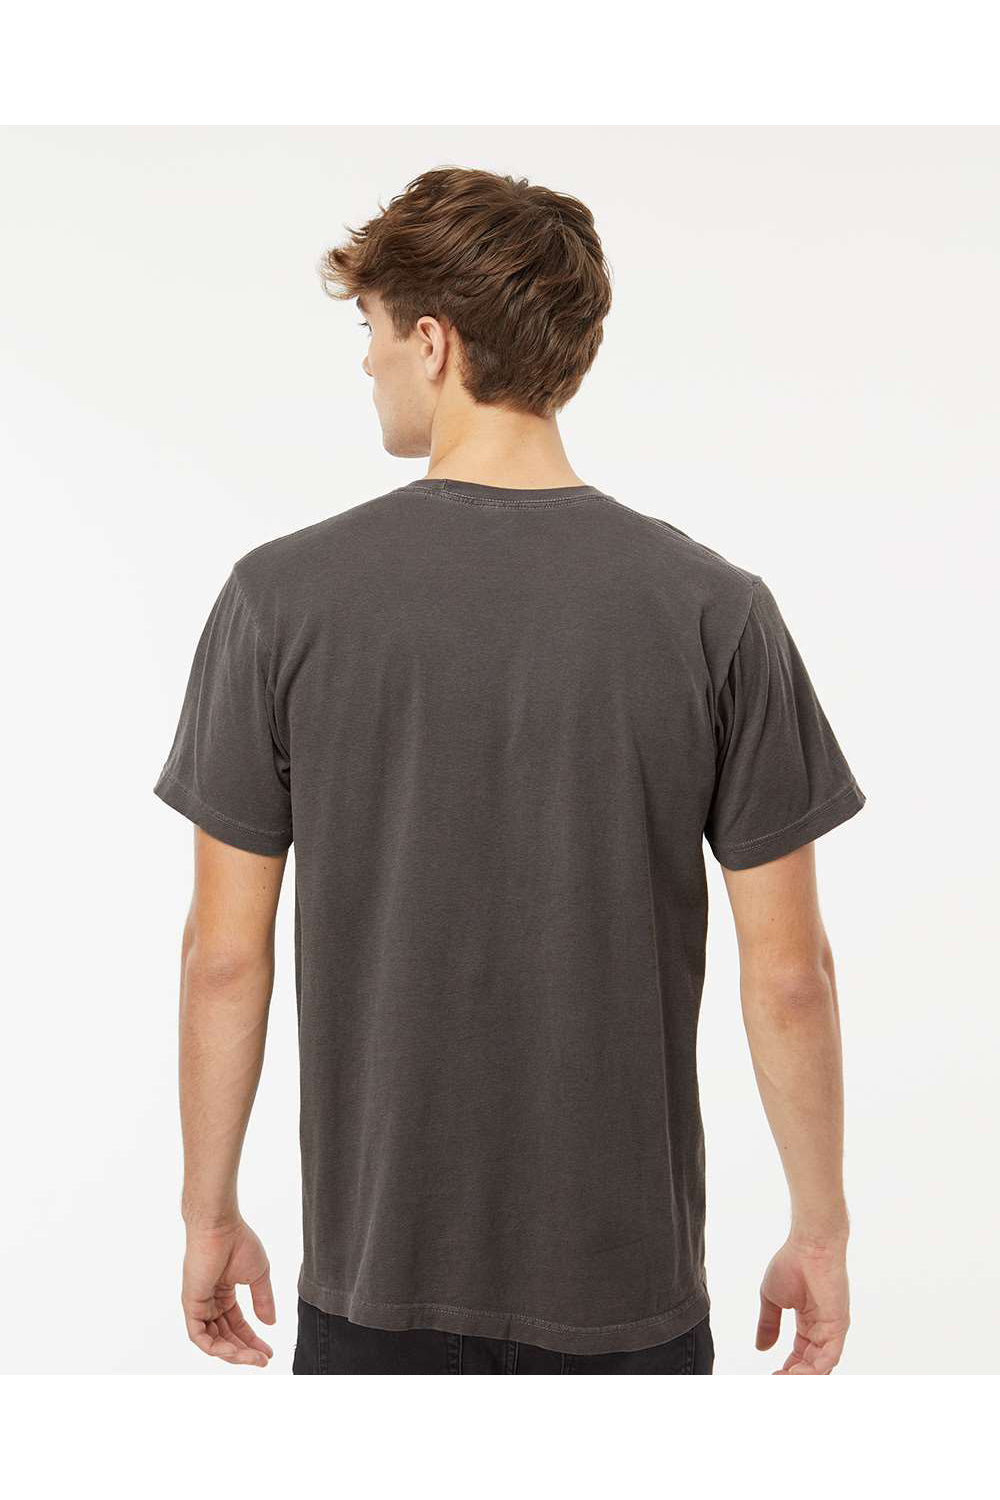 M&O 6500M Mens Vintage Garment Dyed Short Sleeve Crewneck T-Shirt Charcoal Grey Model Back